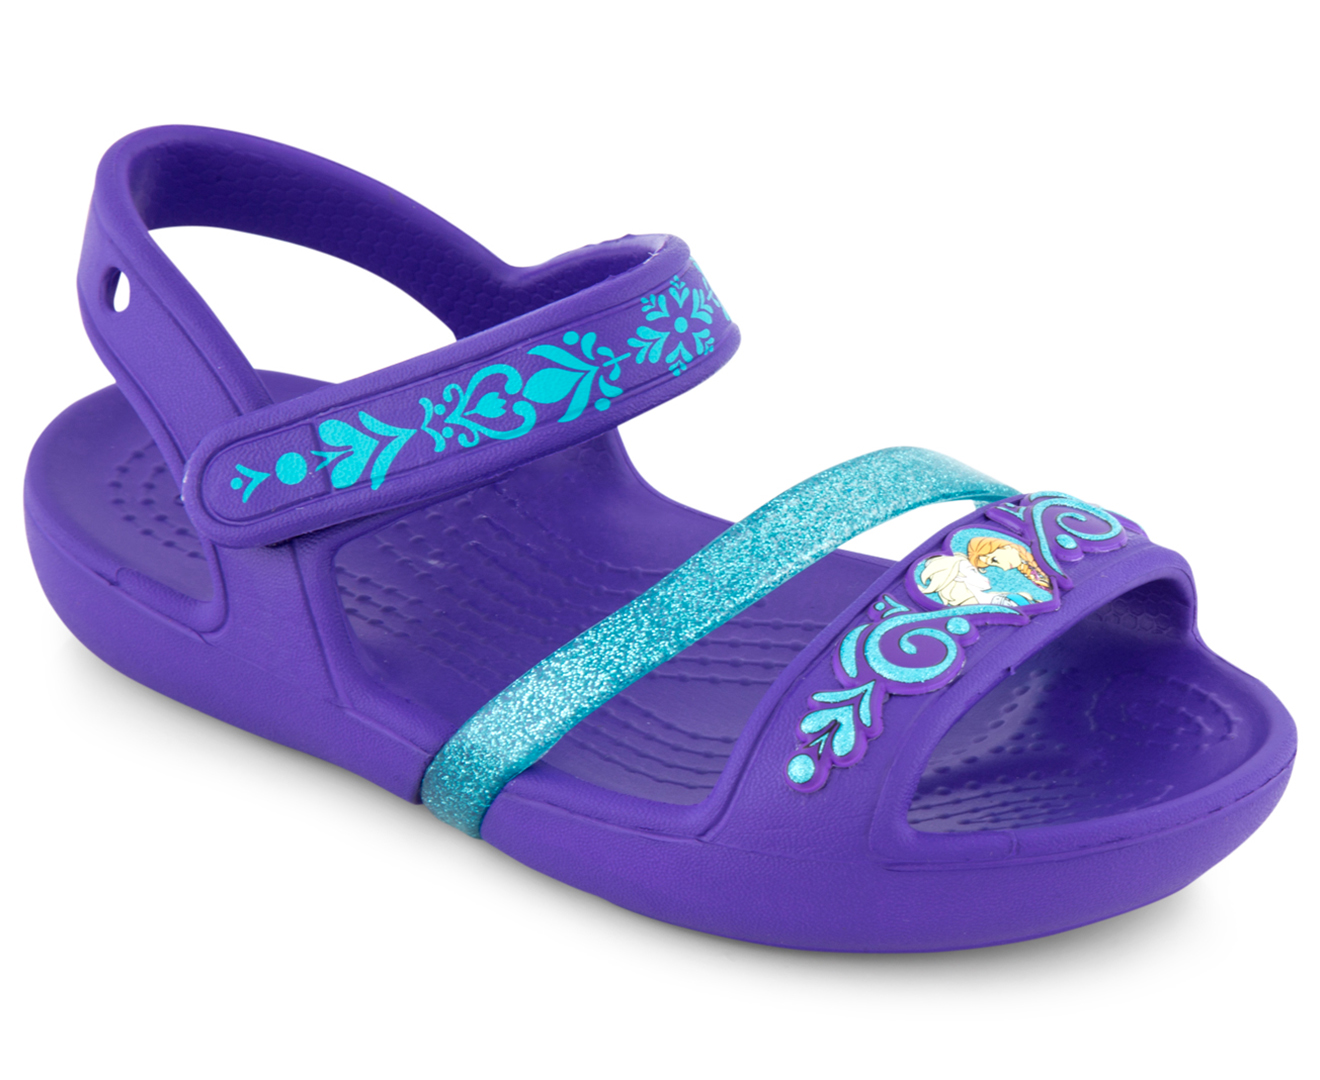  Crocs  Kids Lina Frozen  Sandal  Ultraviolet Scoopon 